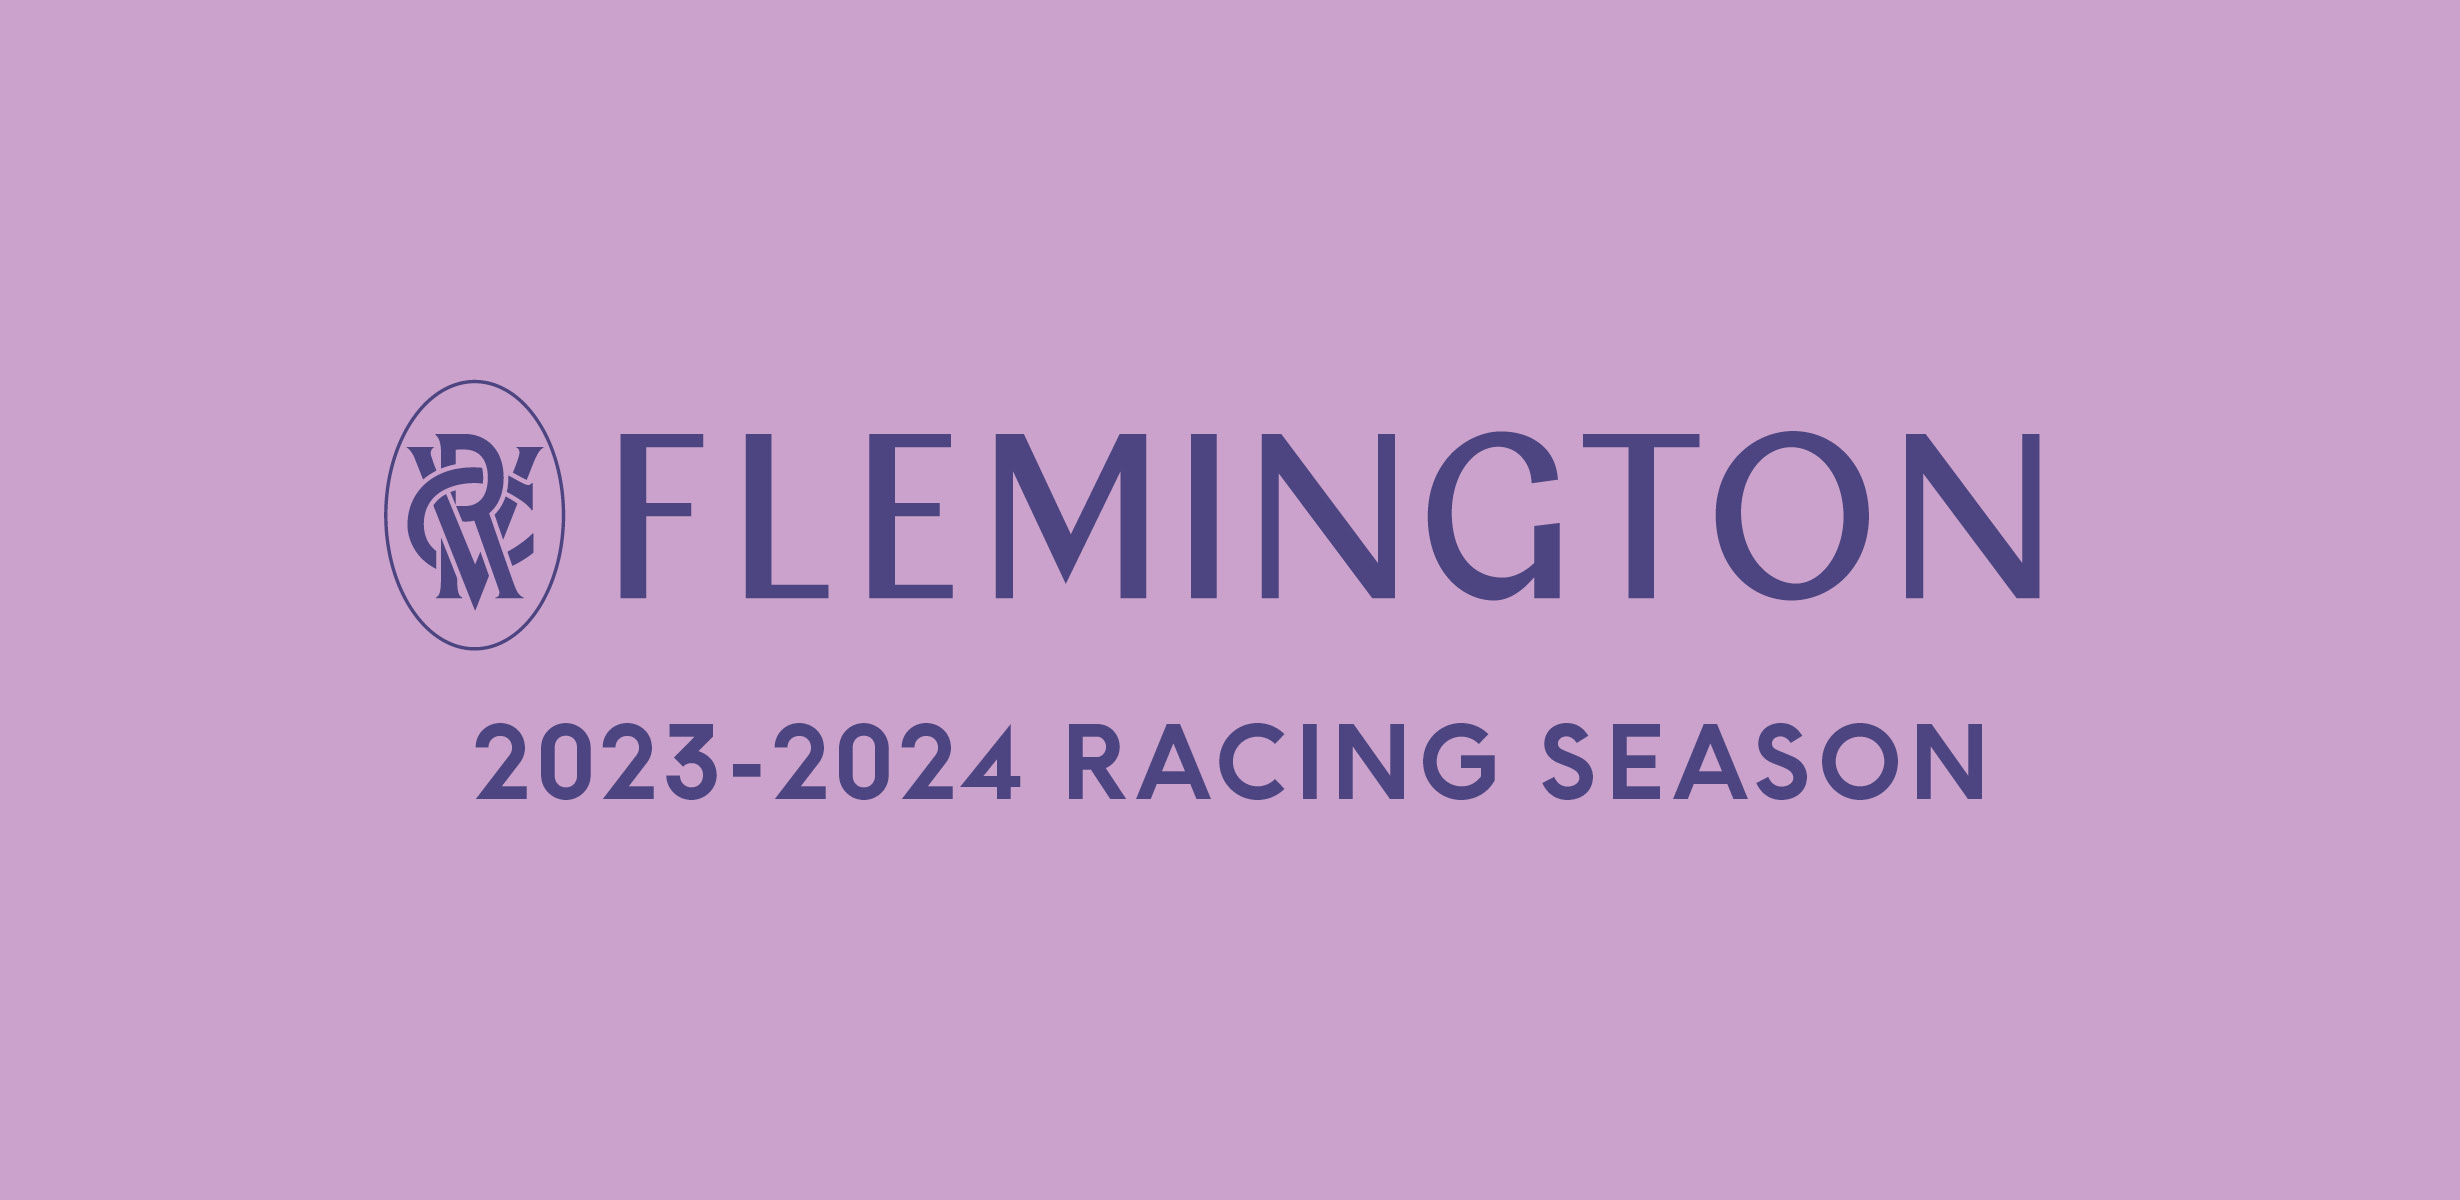 Flemington dates set for 20232024 racing season Latest News VRC